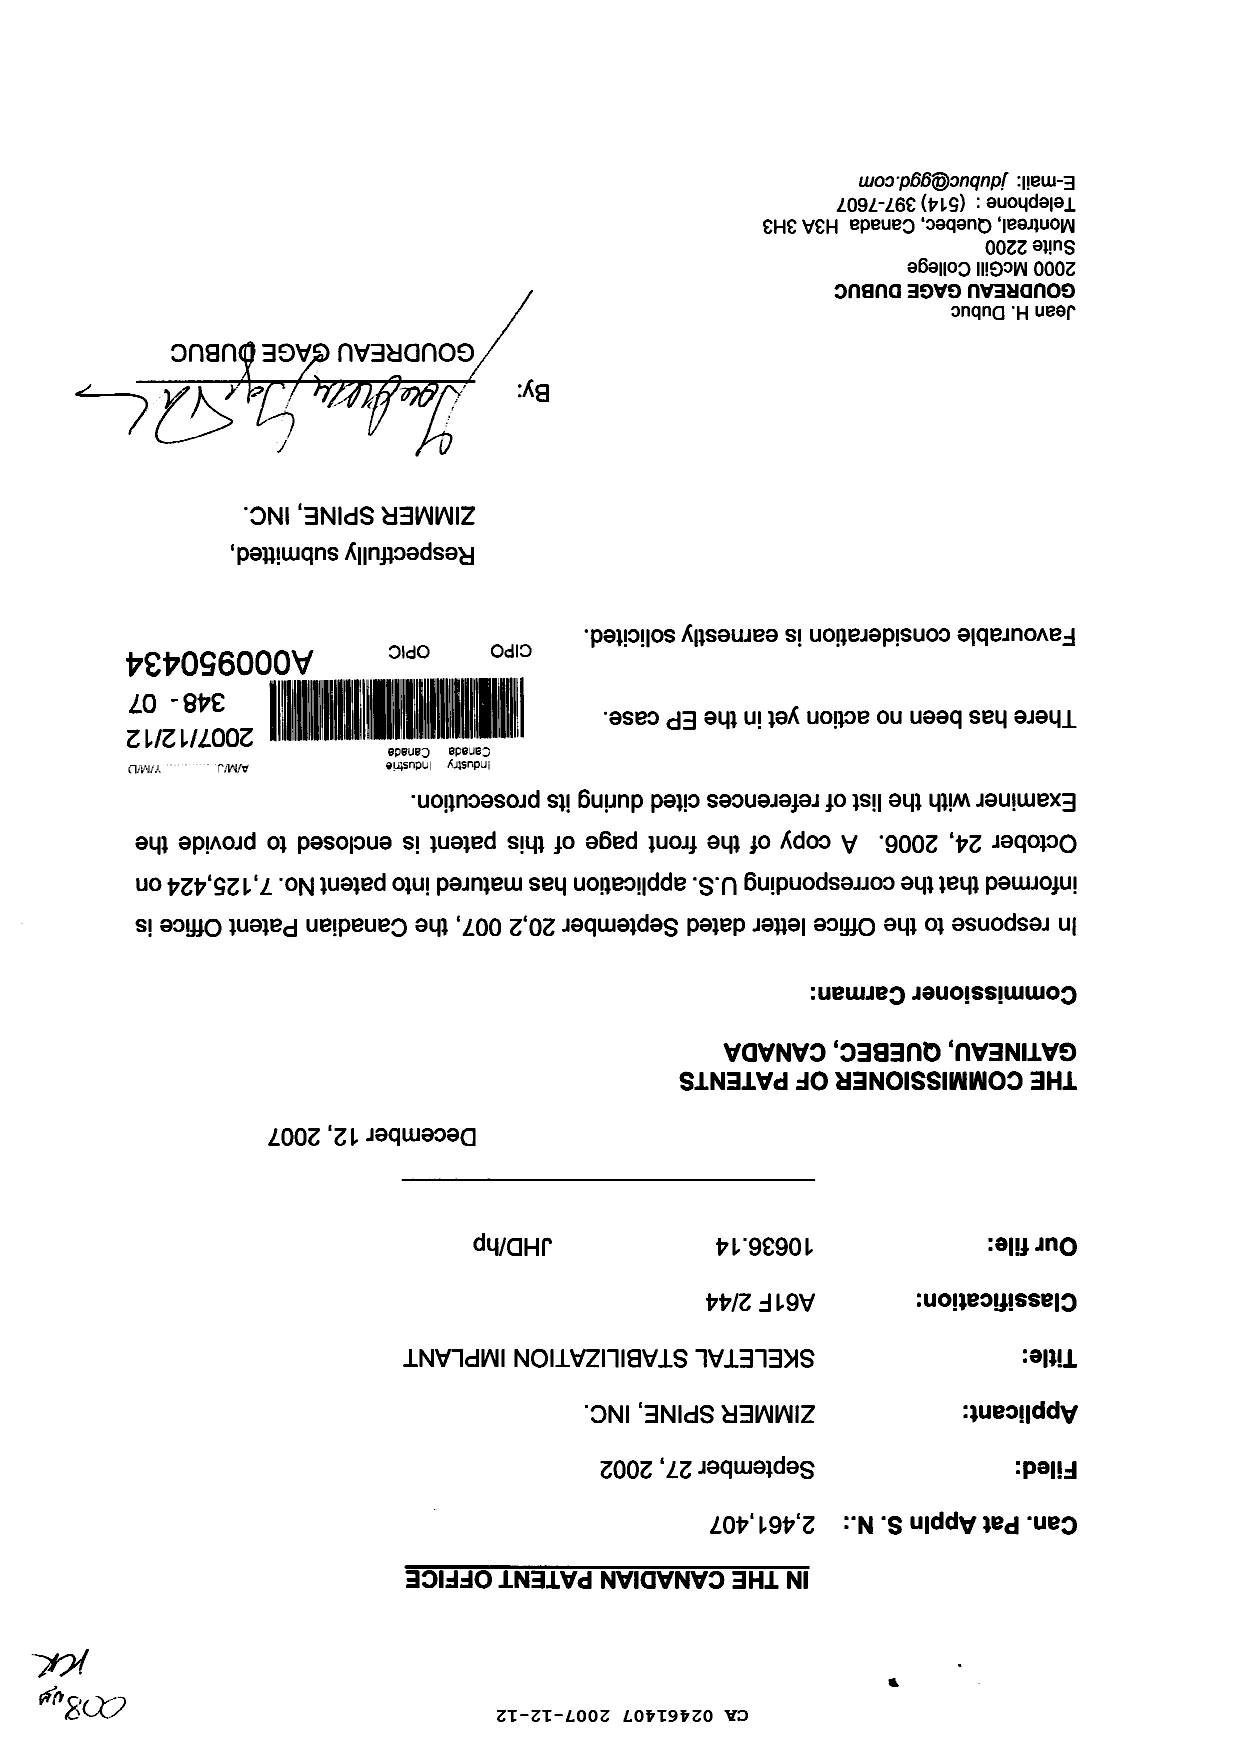 Canadian Patent Document 2461407. Prosecution-Amendment 20061212. Image 1 of 1